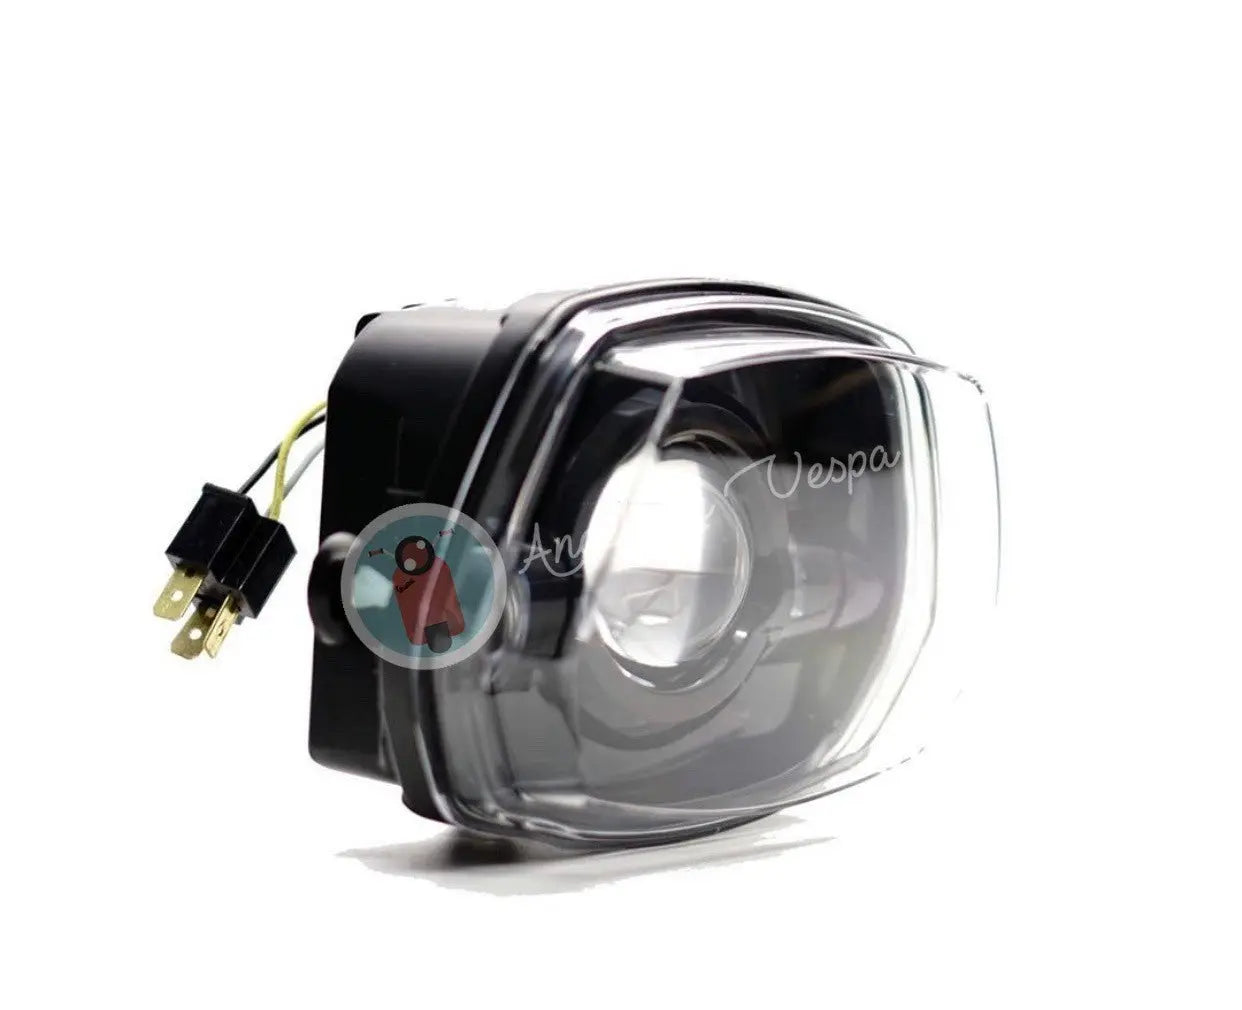 LED Headlight Projector | Vespa Sprint 50-150cc Angeleye Vespa 214.95 Falan Parts